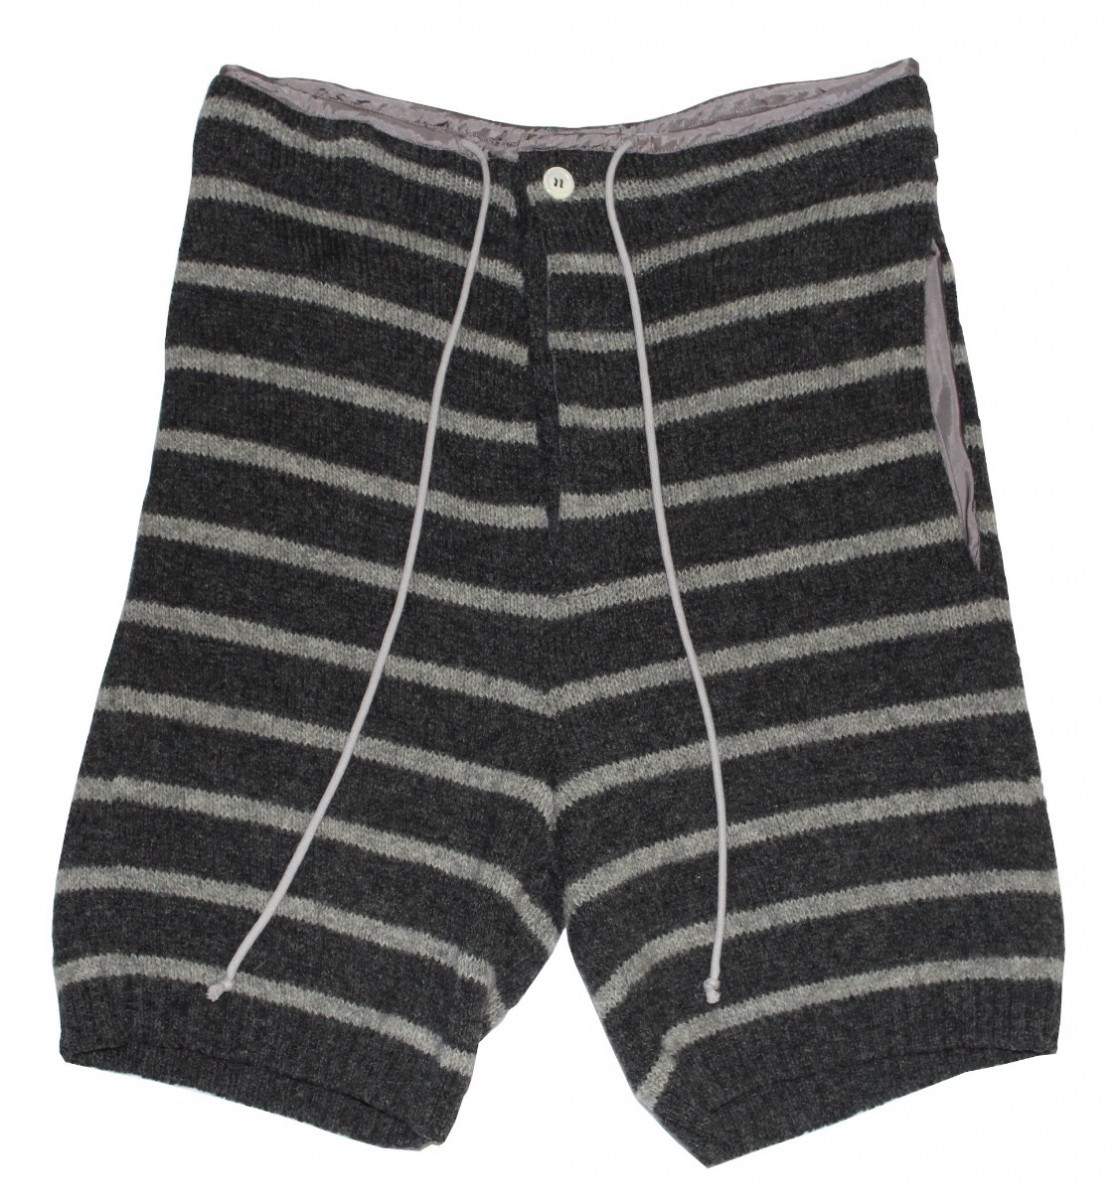 Prisoner Striped Shorts - 1